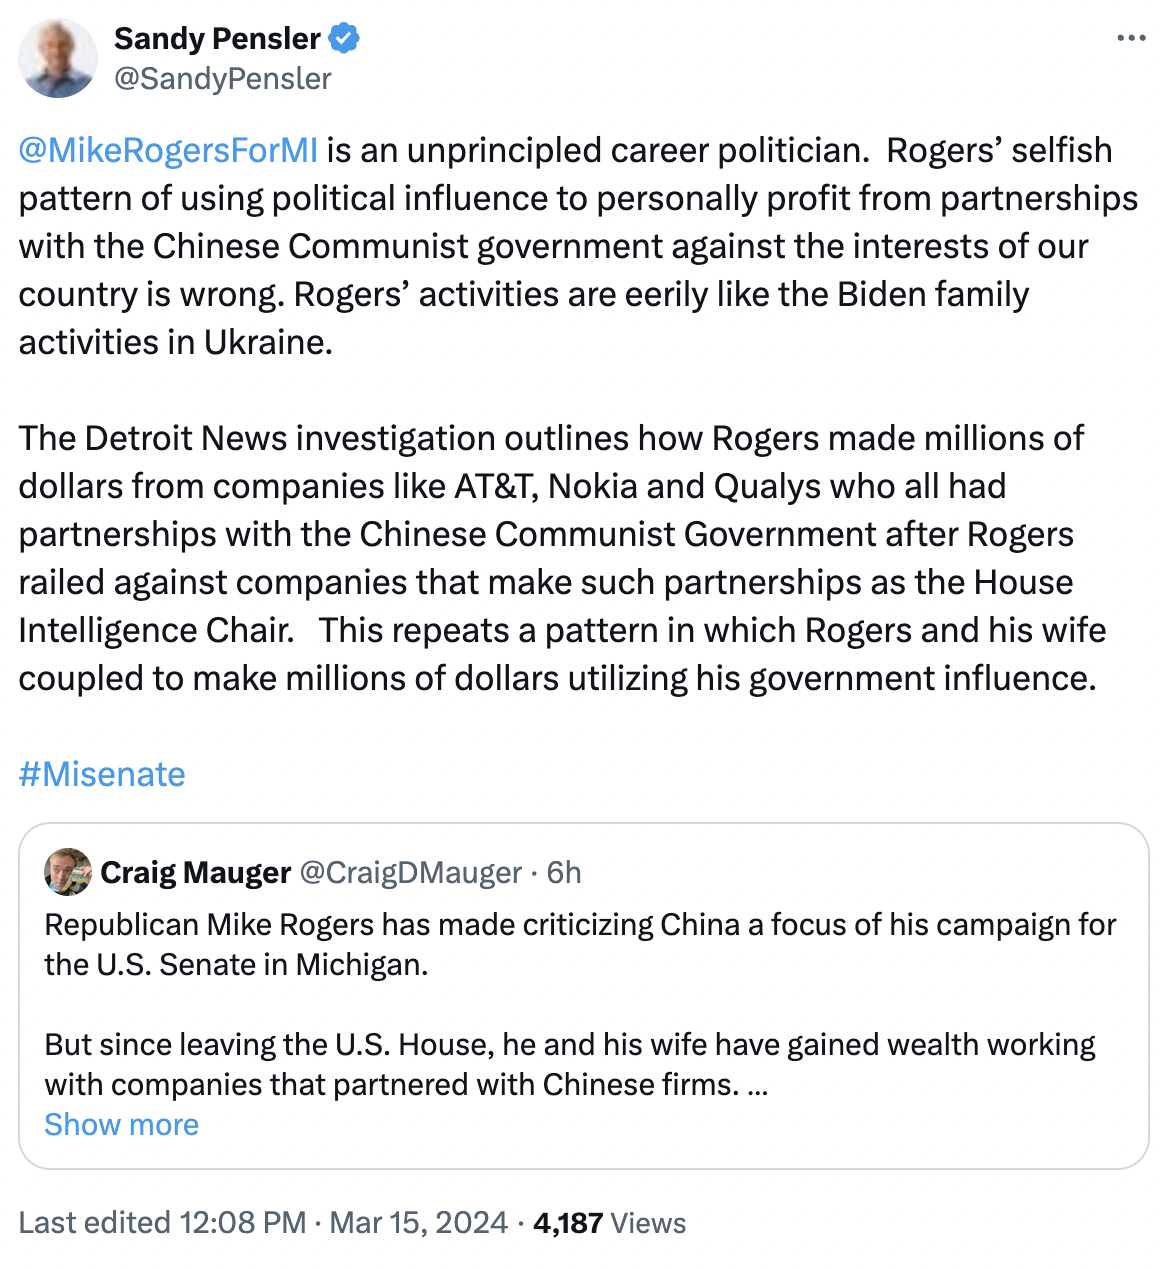 Sandy Pensler tweet attacking Mike Rogers as an unprincipled career politician. 